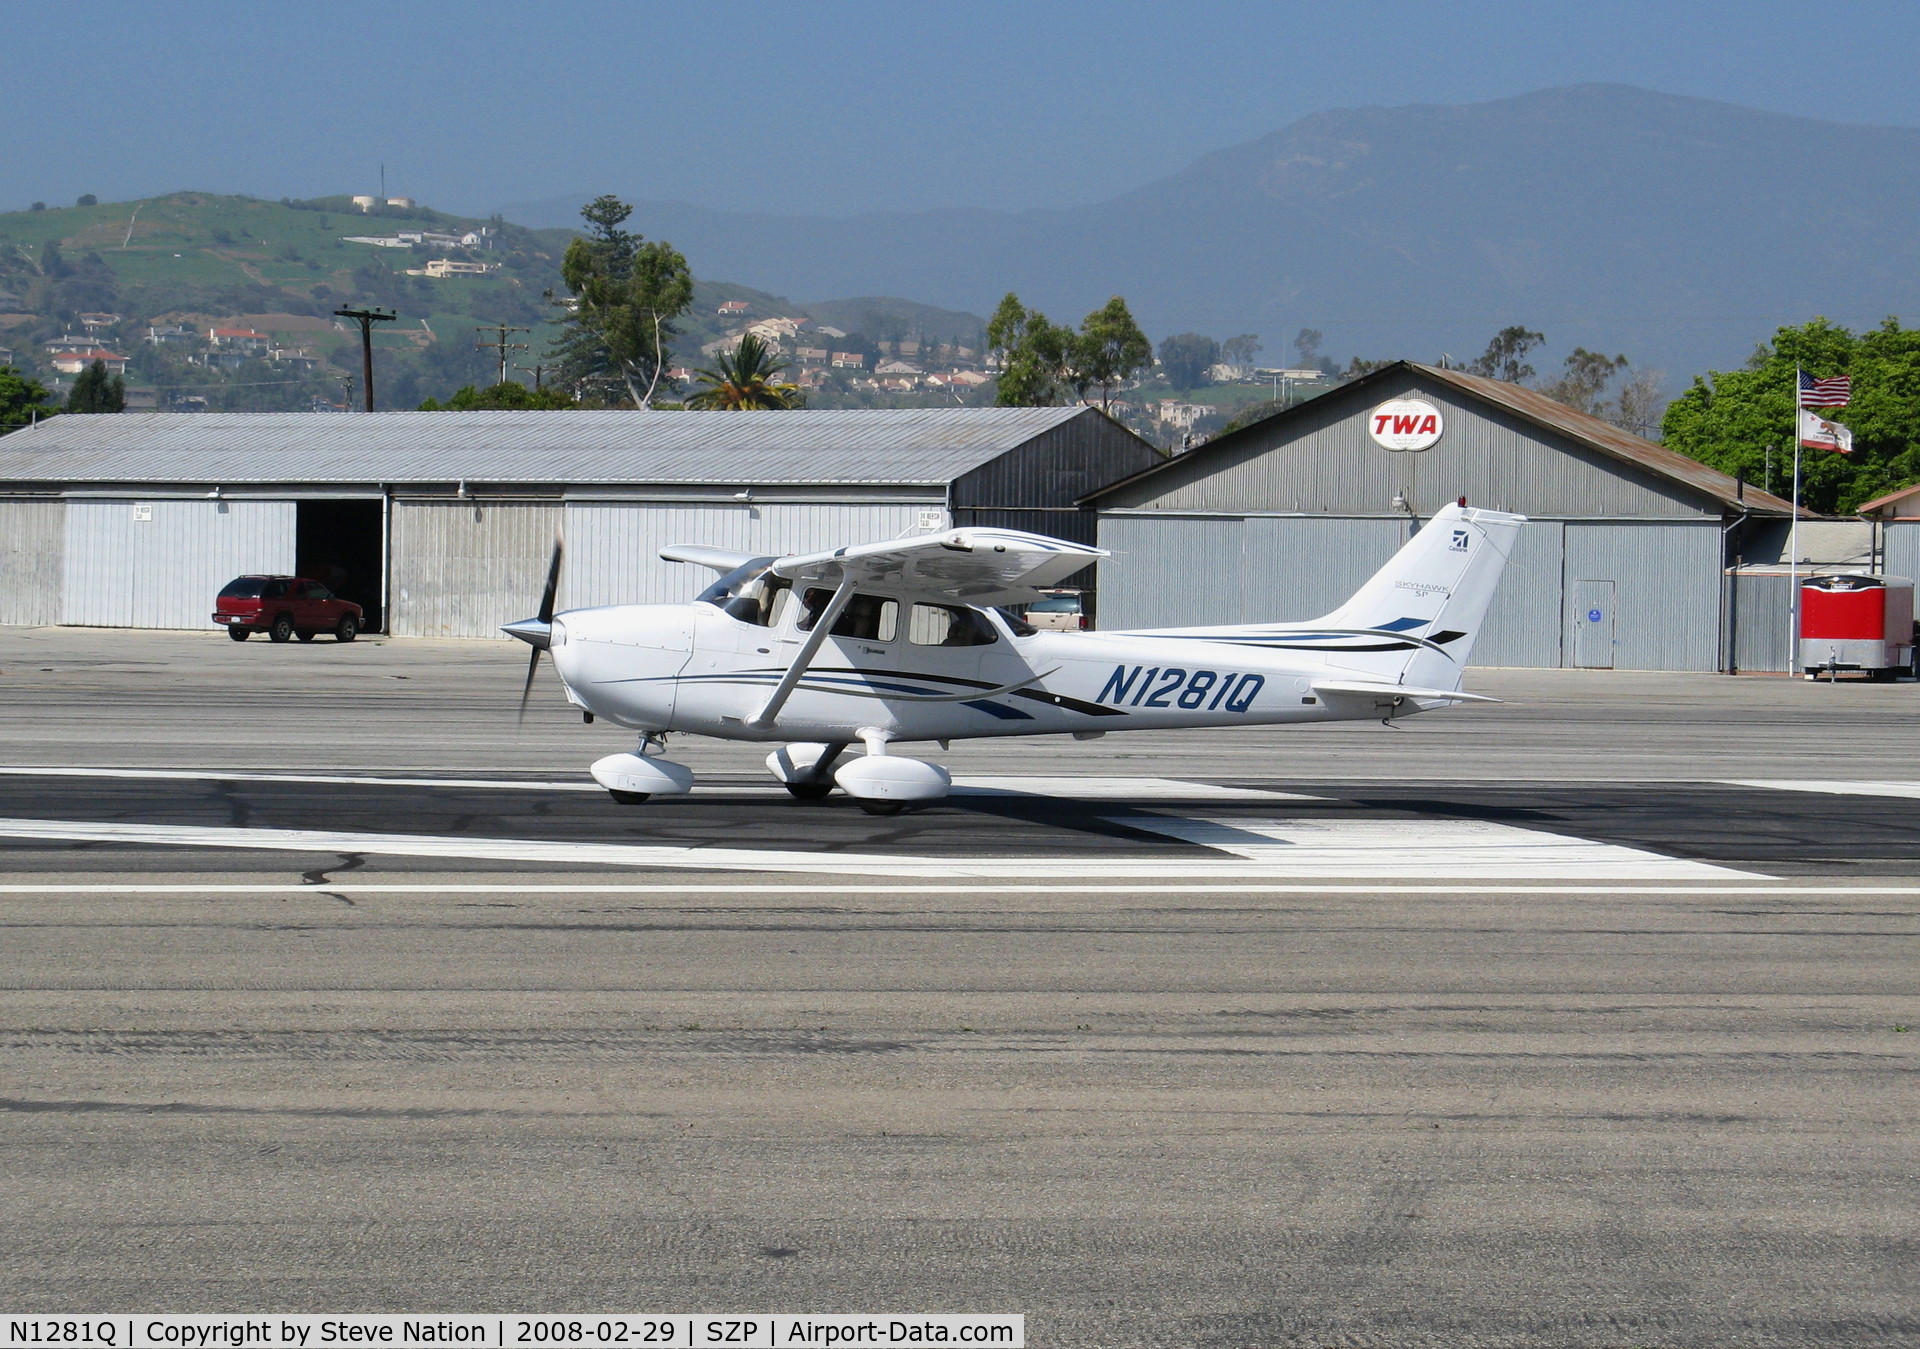 N1281Q, 2006 Cessna 172S C/N 172S10333, 2006 Cessna 172S Skyhawk rolling for take-off @ Santa Paula Airport (Ventura County), CA